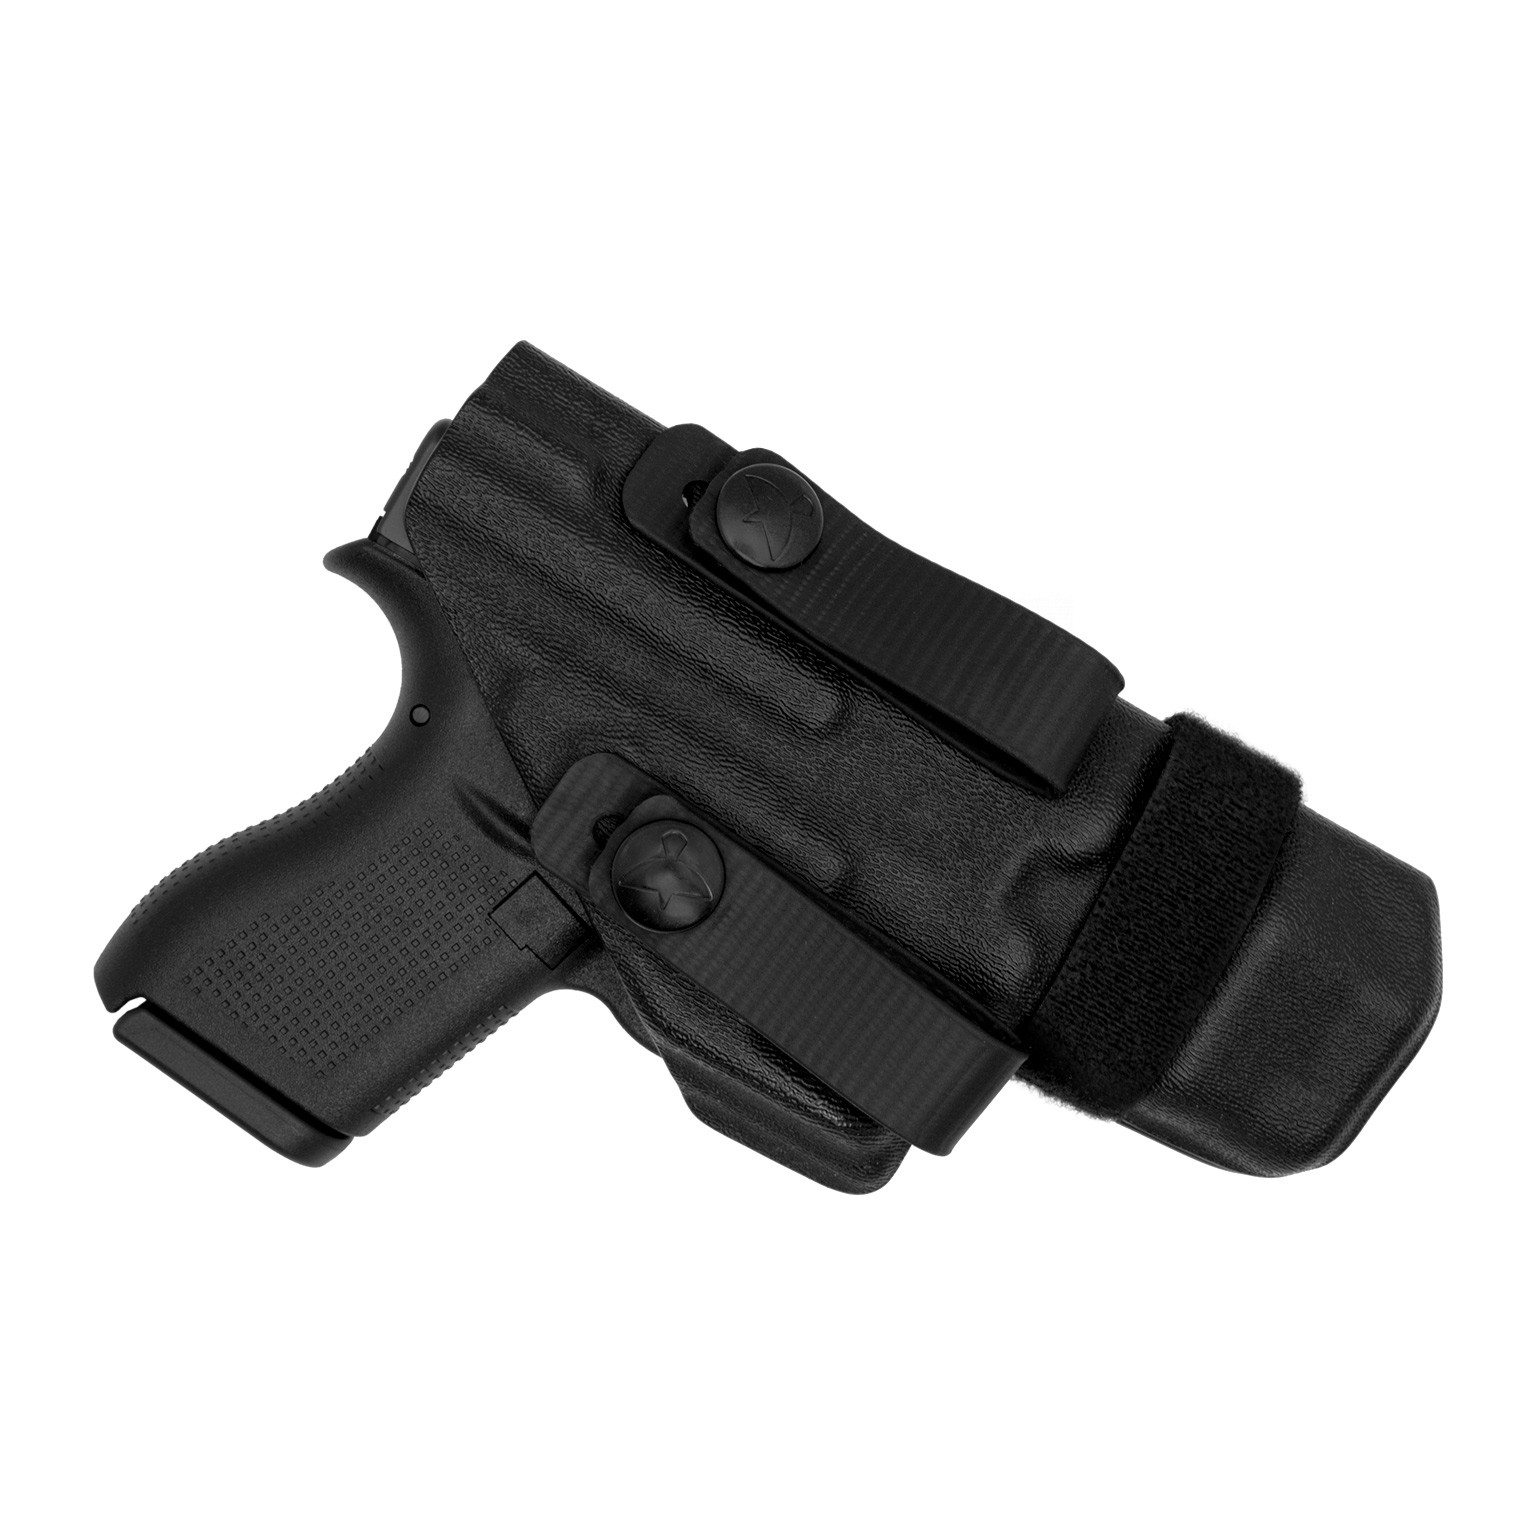 Raven Concealment Systems Morrigan IWB Kydex Ambi Holster Black for Glock 19 for sale online 